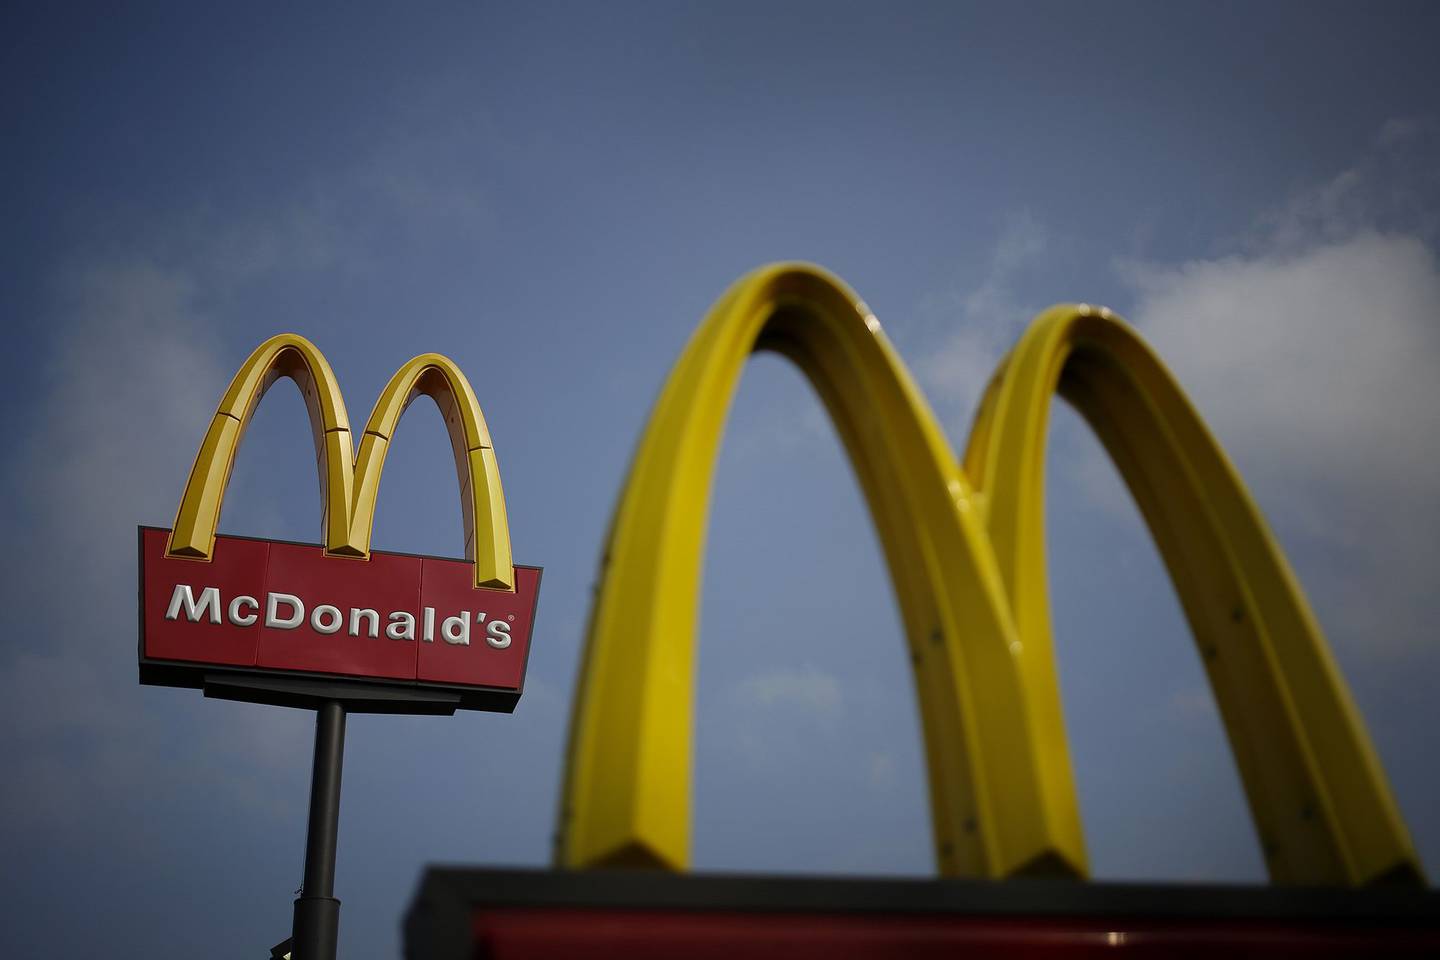 McDonalds, which has more than 14,200 domestic restaurants, has been streamlining its menu and offering more customizable options, aiming to compete with fast-casual chains like Chipotle Mexican Grill Inc.